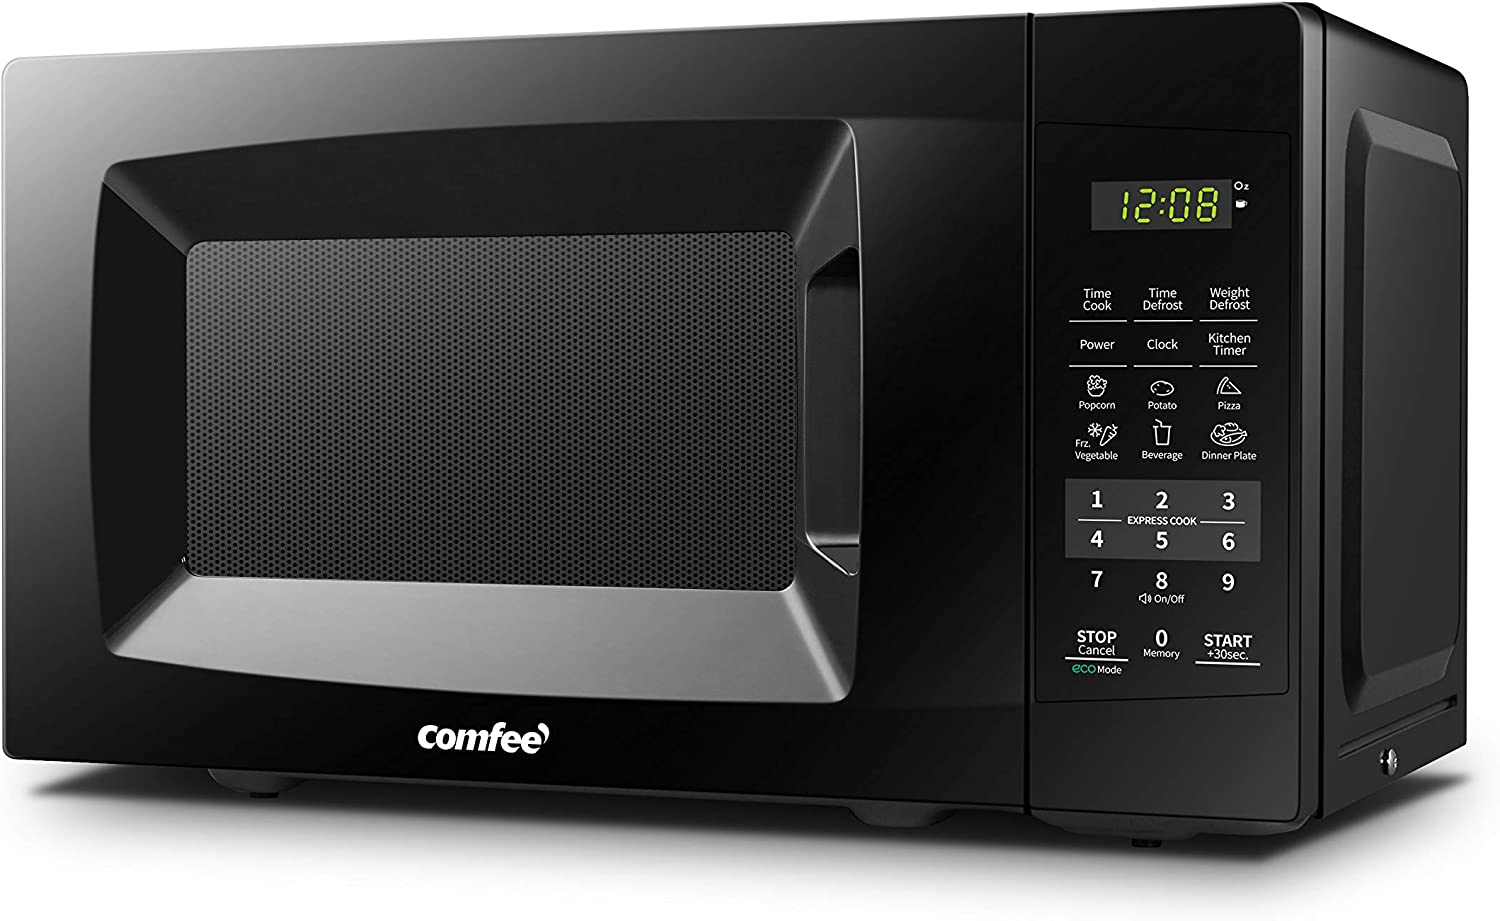 COMFEE’ Countertop Microwave Logo